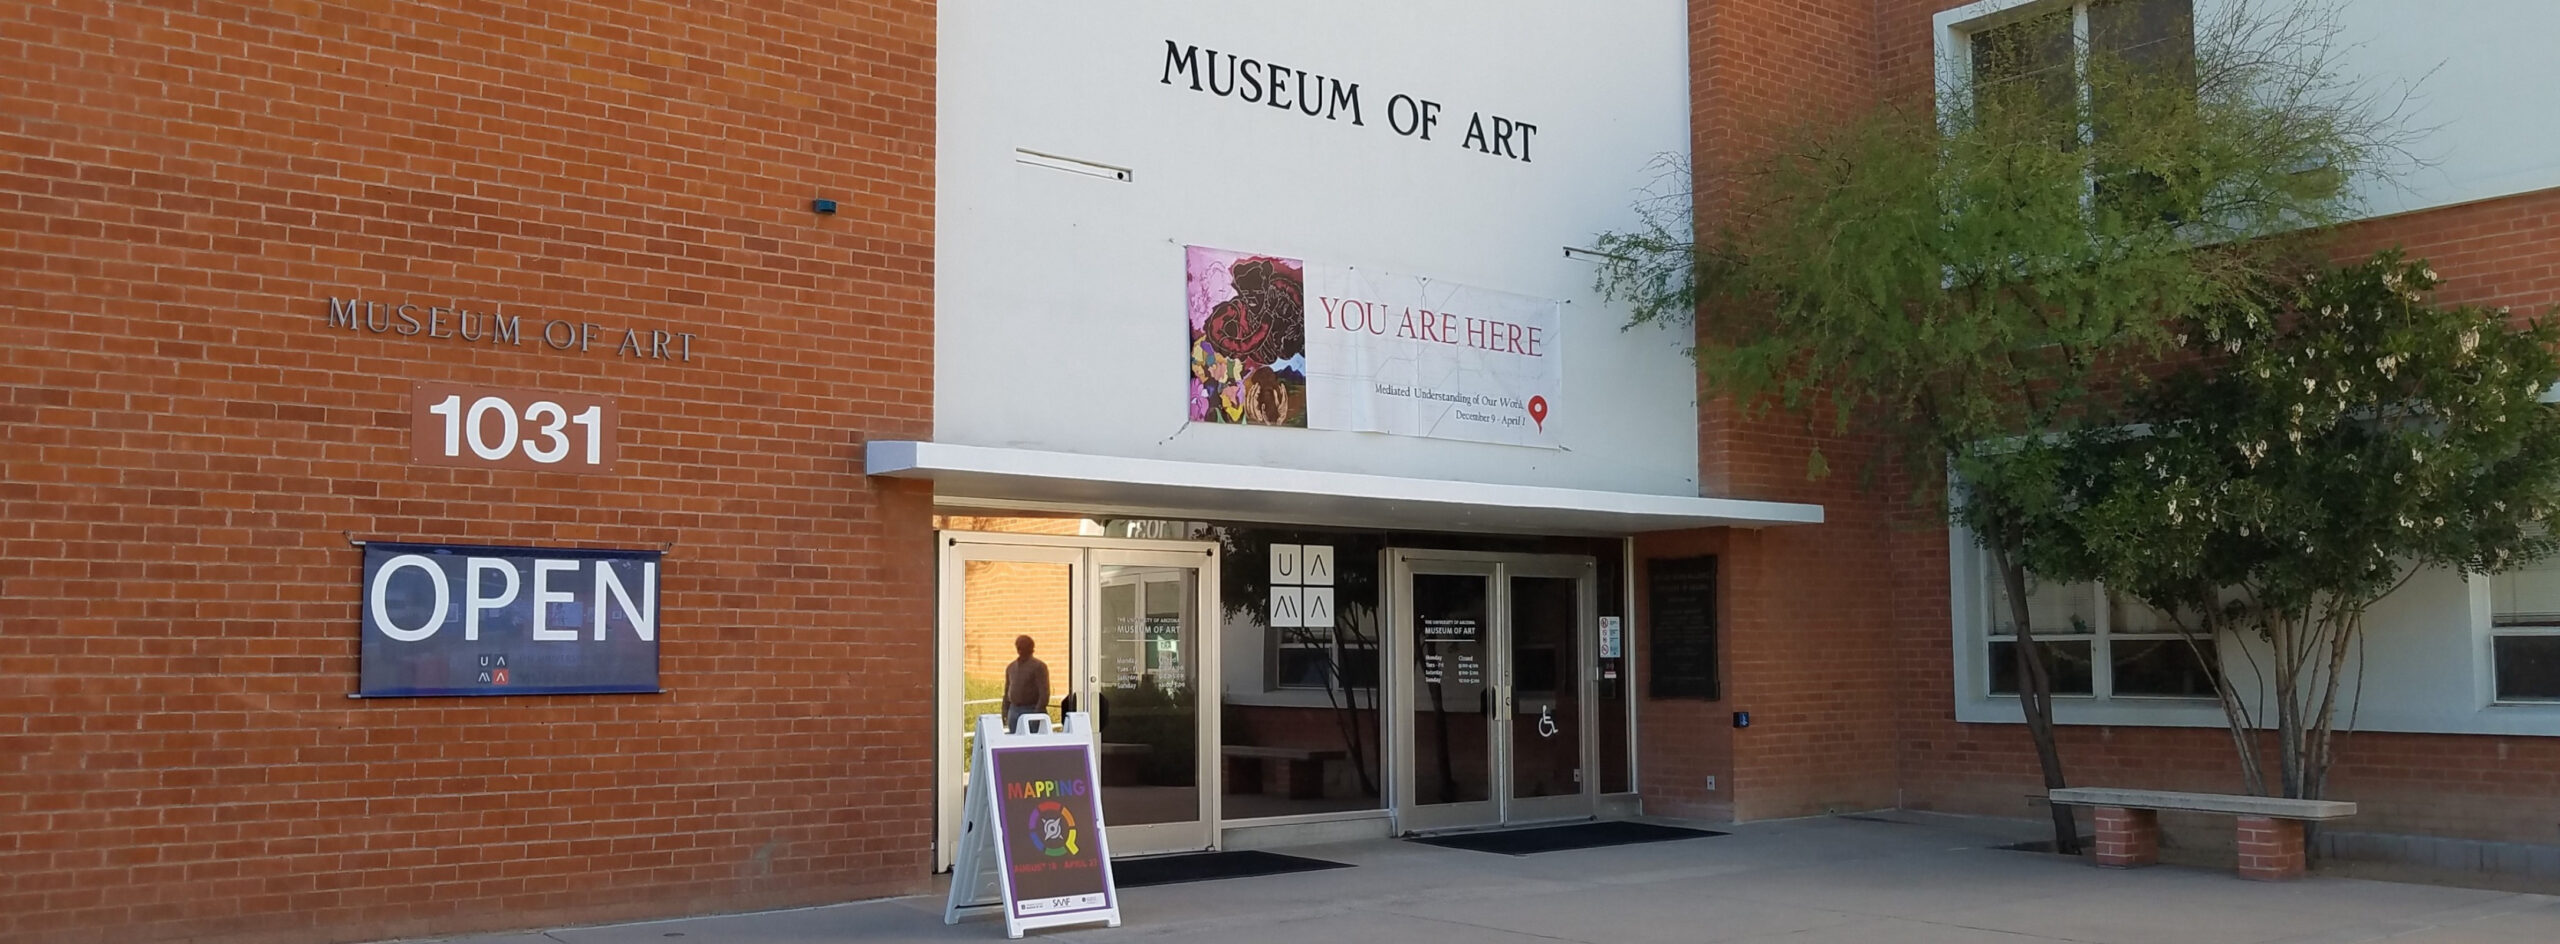 museo de arte